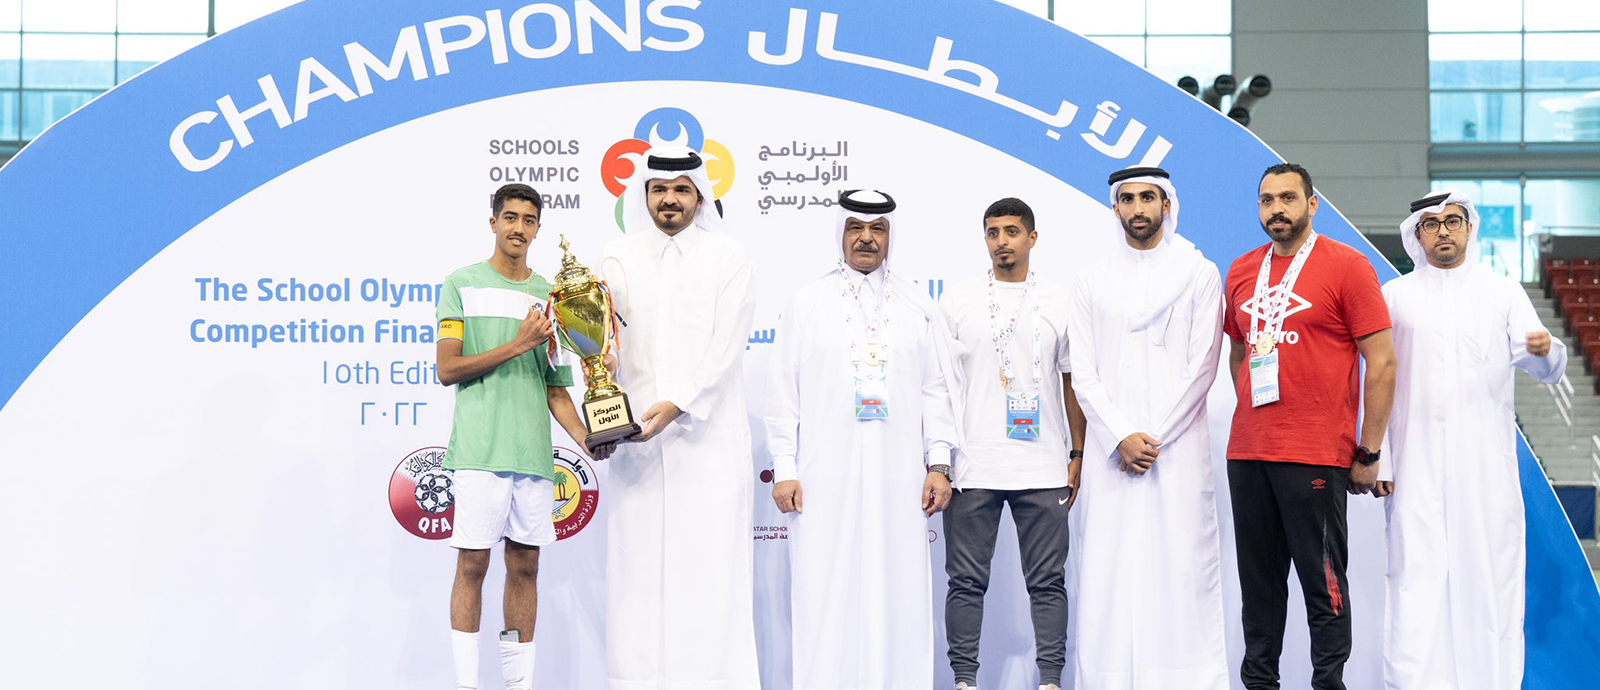 Sheikh Joaan crowns winners at Schools Olympic Program